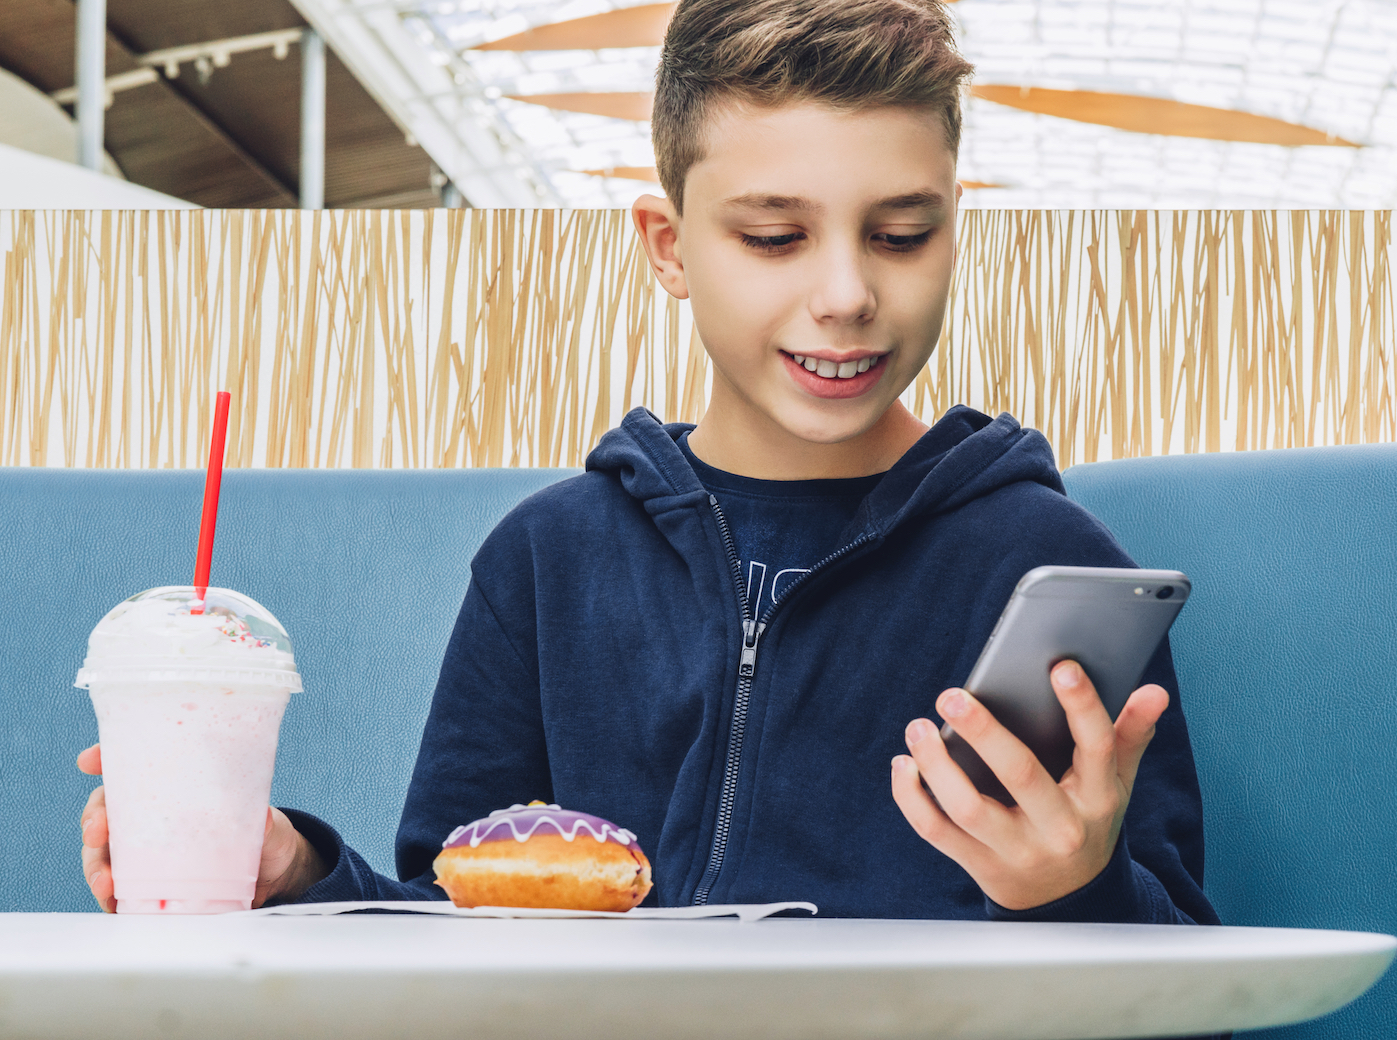 Influence of social media on children's food intake